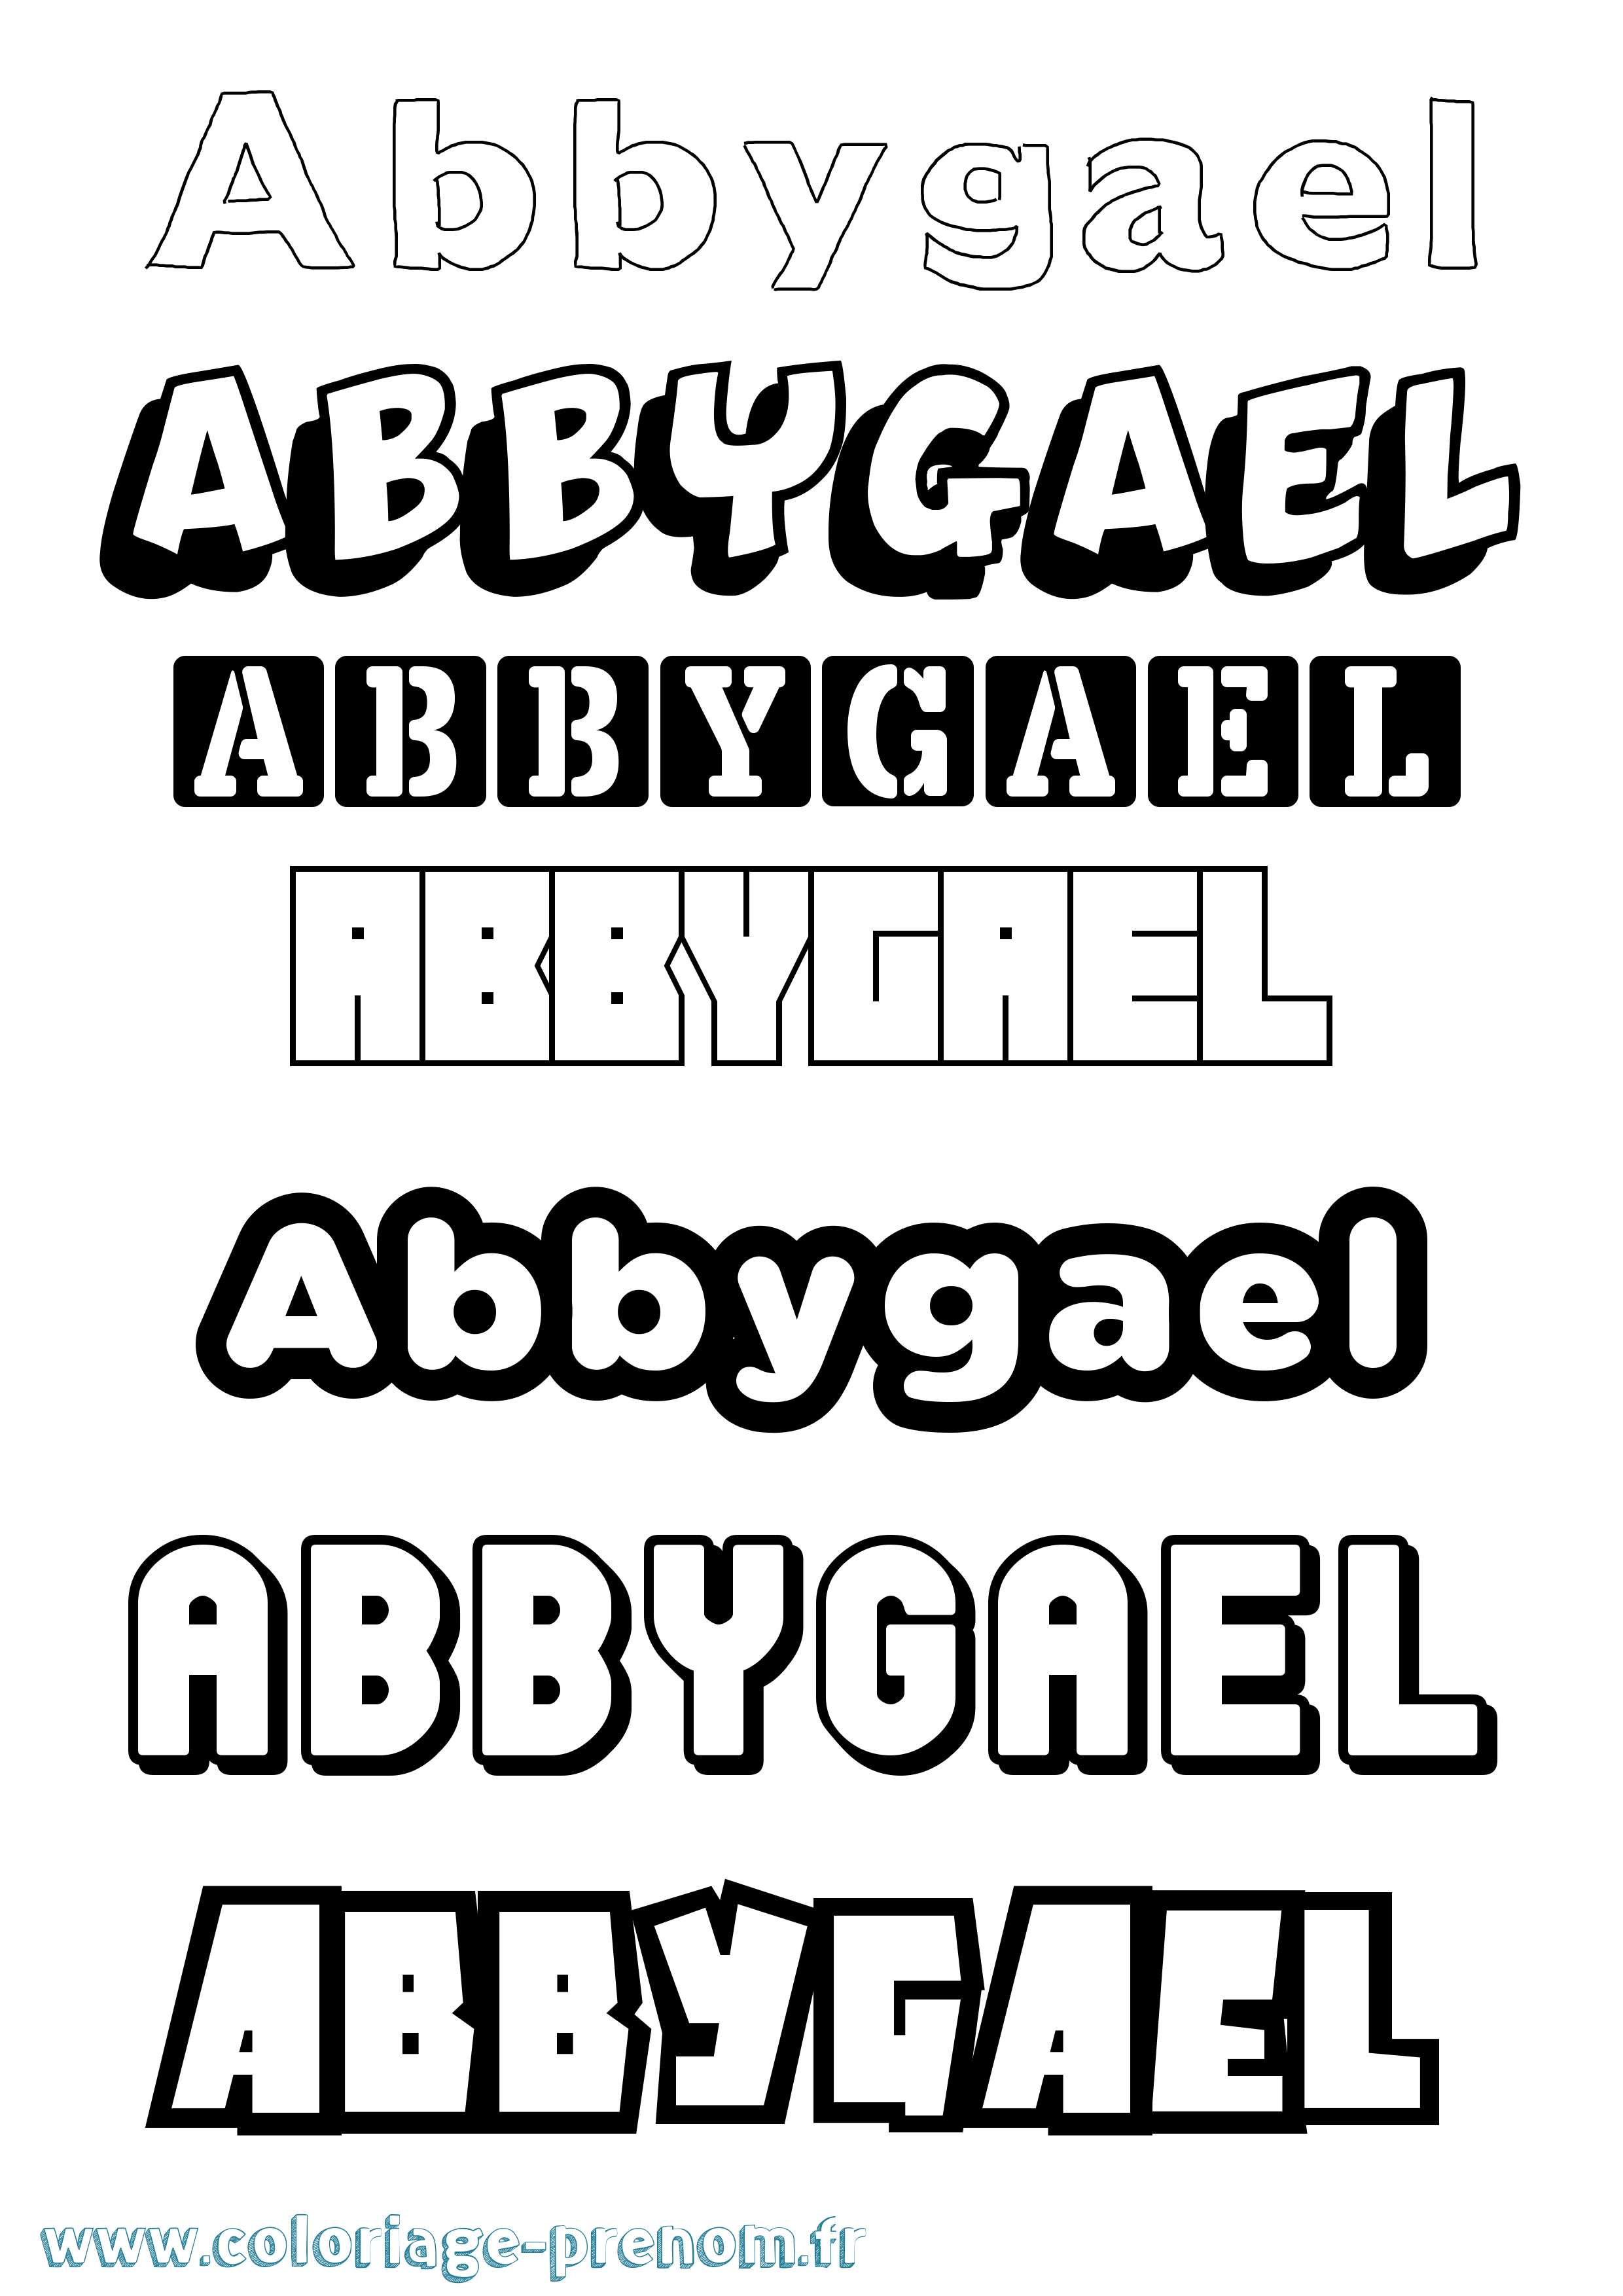 Coloriage prénom Abbygael Simple